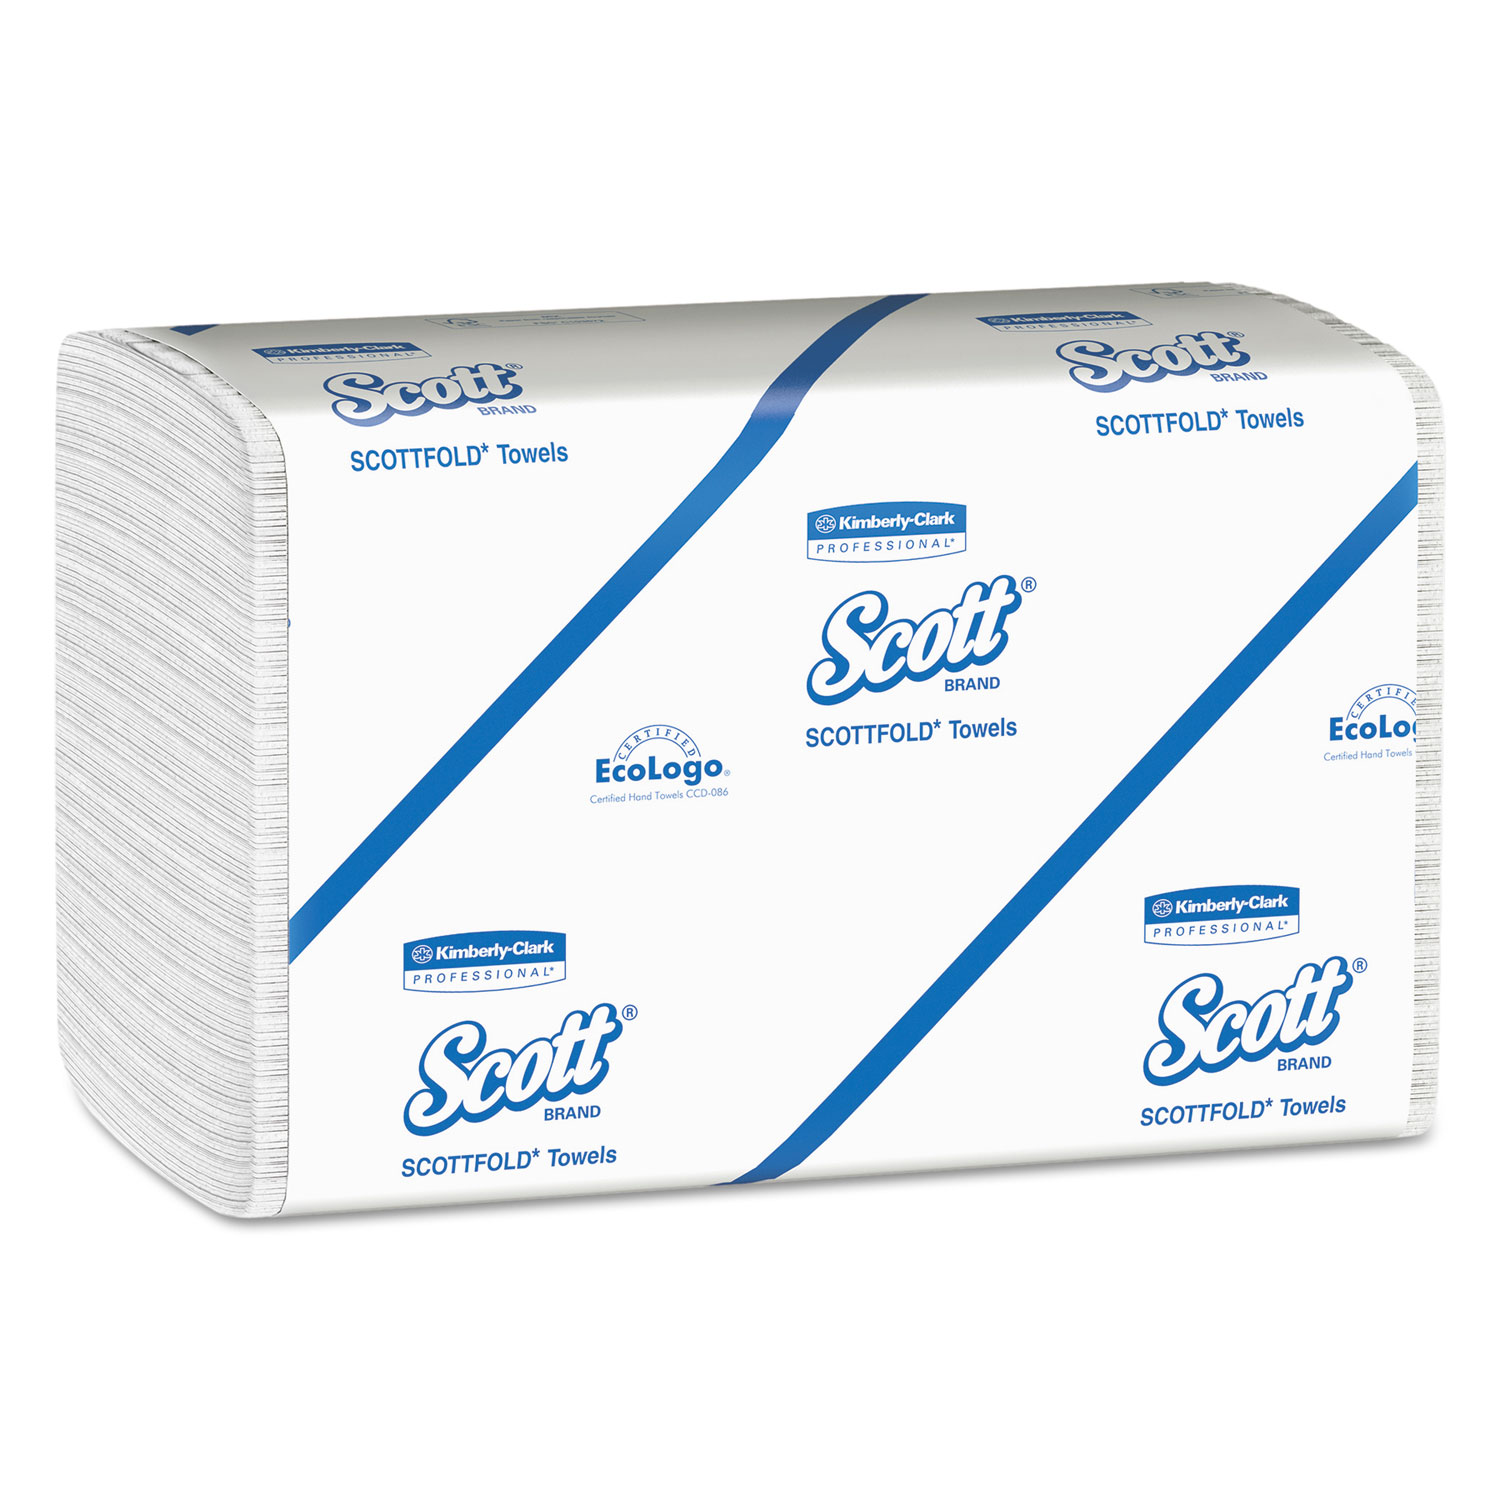  Scott 01960 Pro Scottfold Towels, 7 4/5 x 12 2/5, White, 175 Towels/Pack, 25 Packs/Carton (KCC01960) 